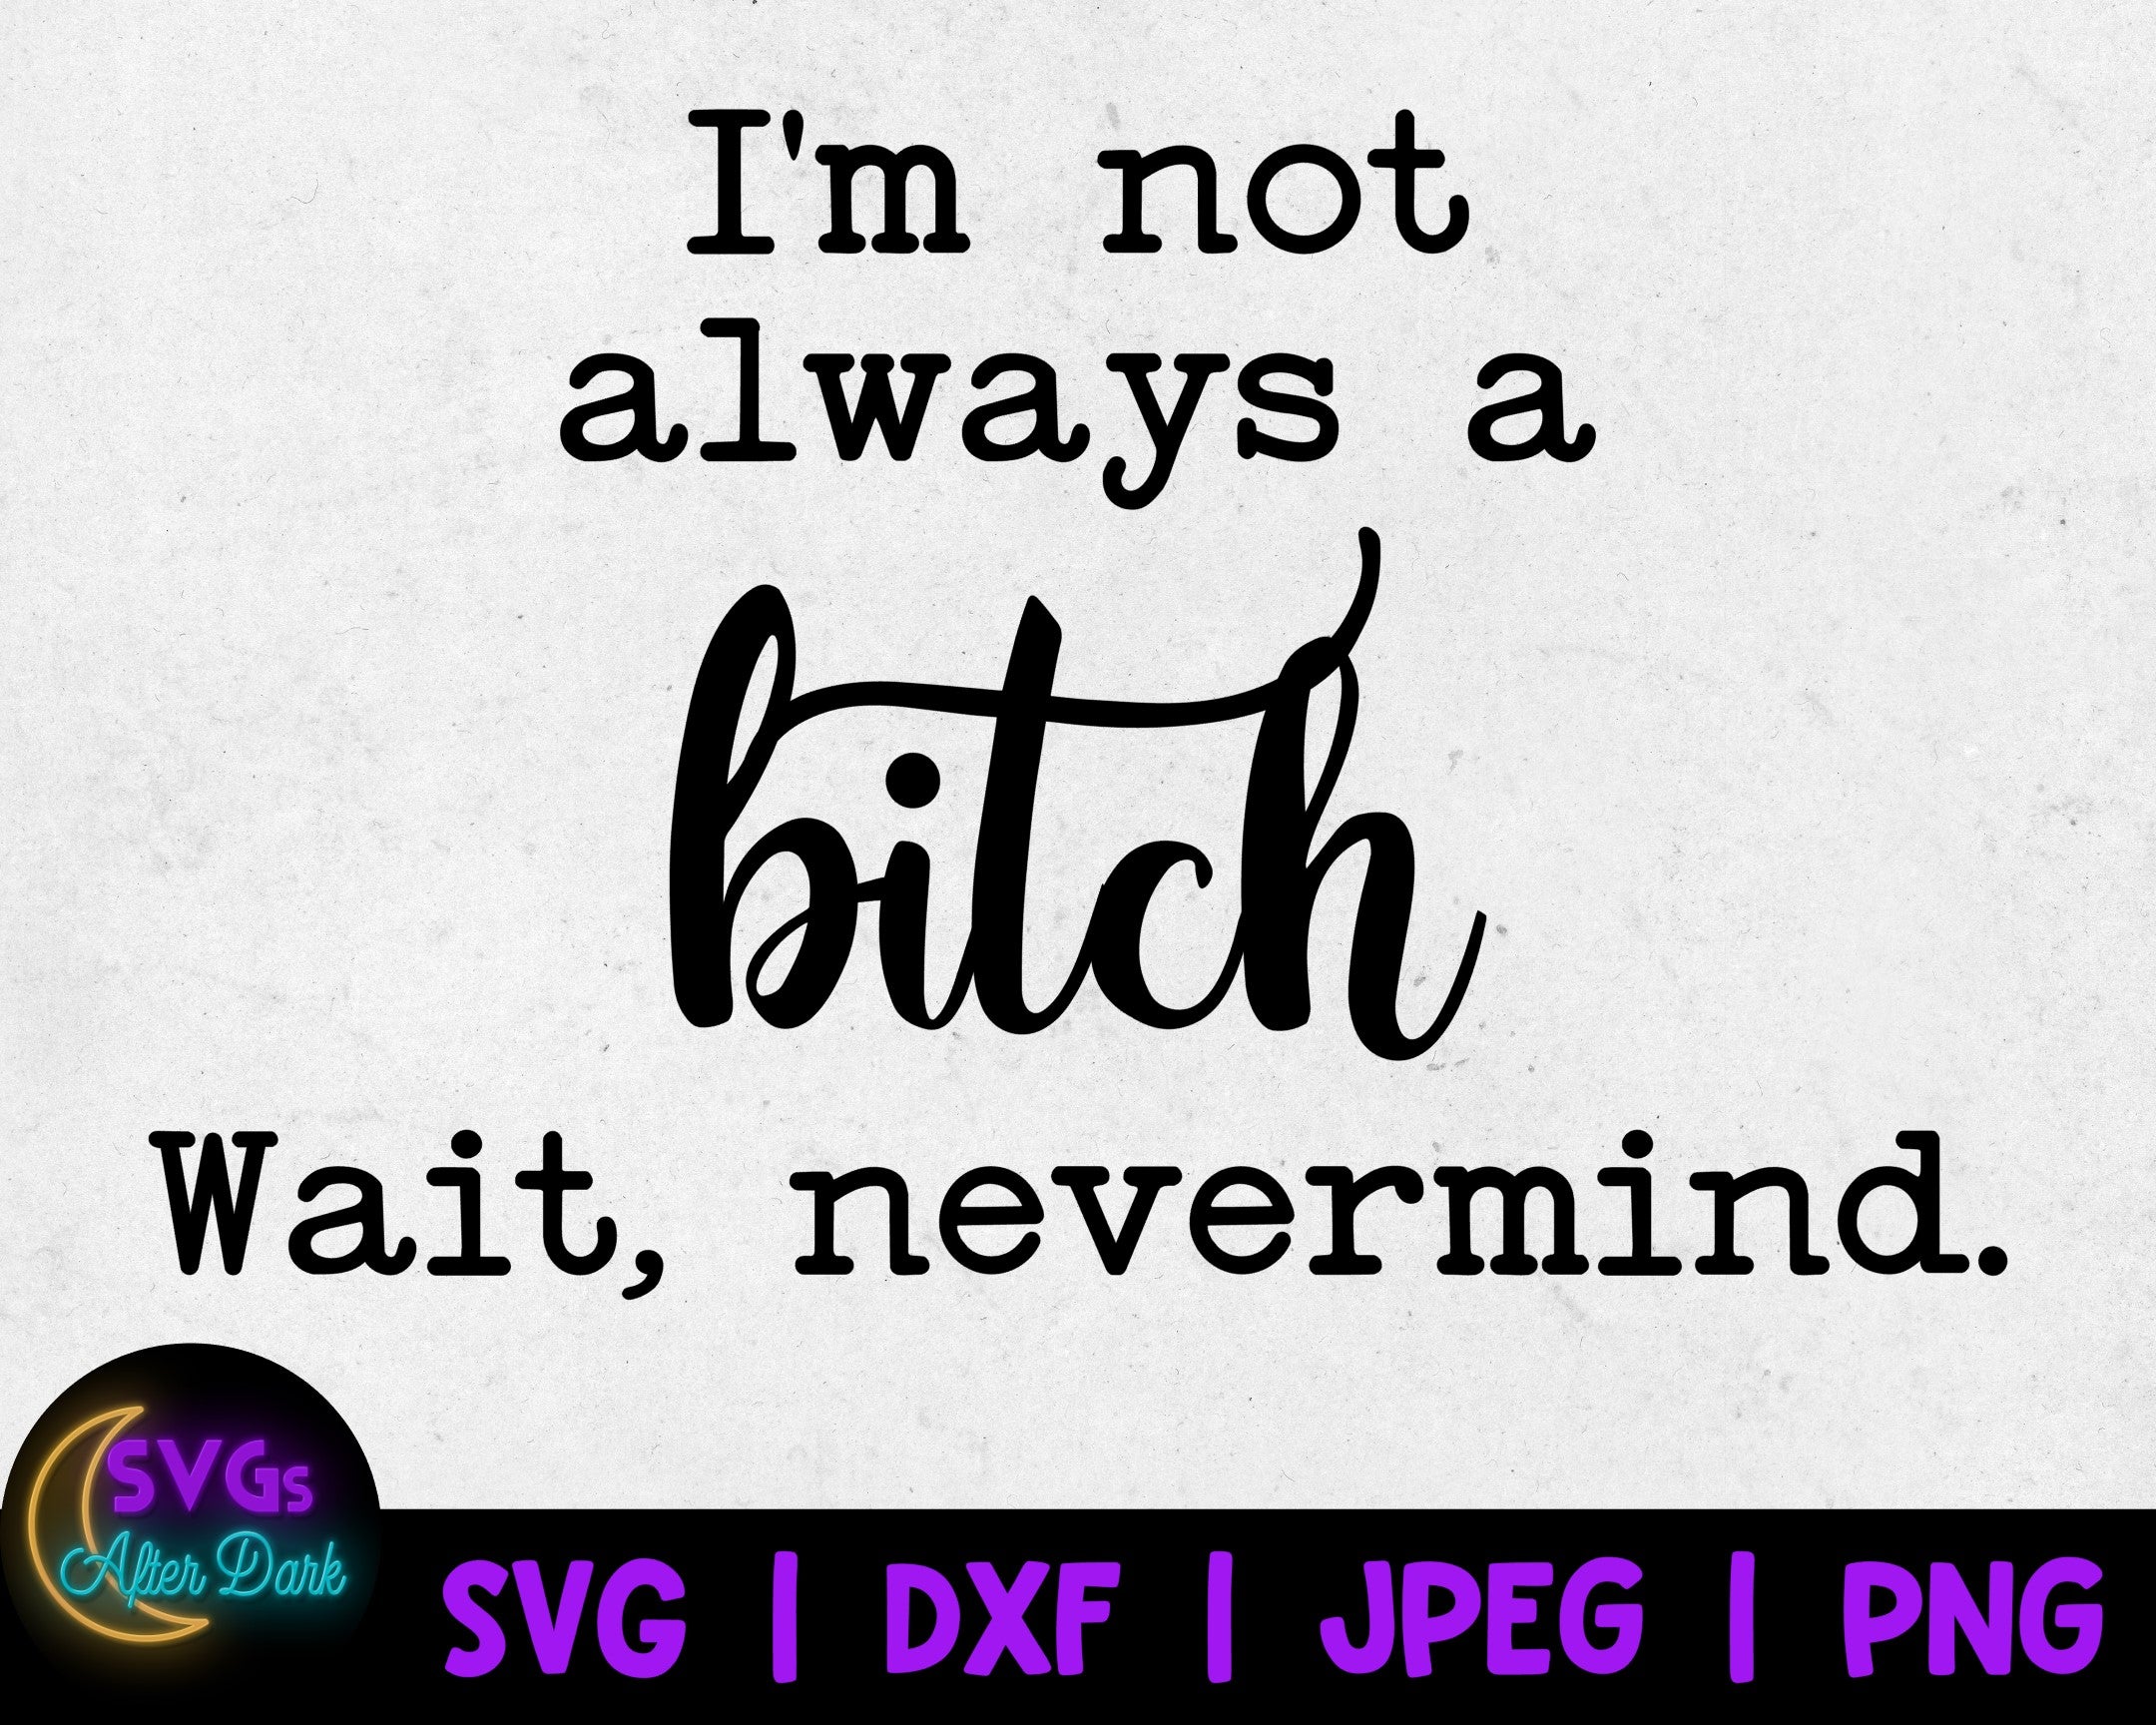 NSFW SVG - I'm not Always a Bitch Wait Nevermind SVG - Bitch Svg - Adult Humor Svg